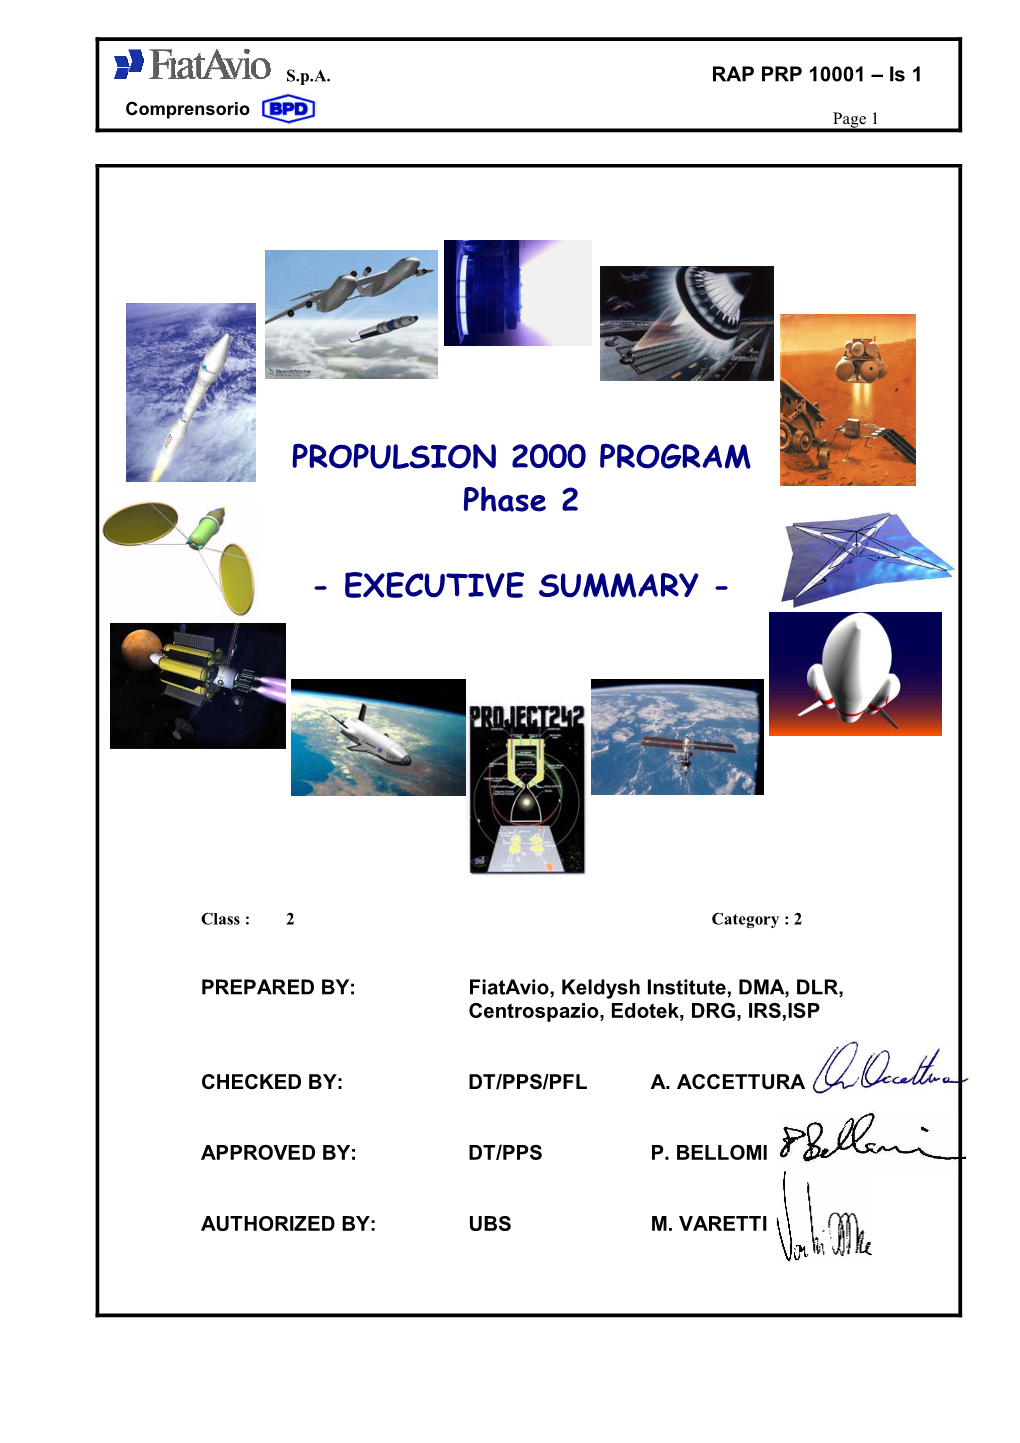 PROPULSION 2000 PROGRAM Phase 2